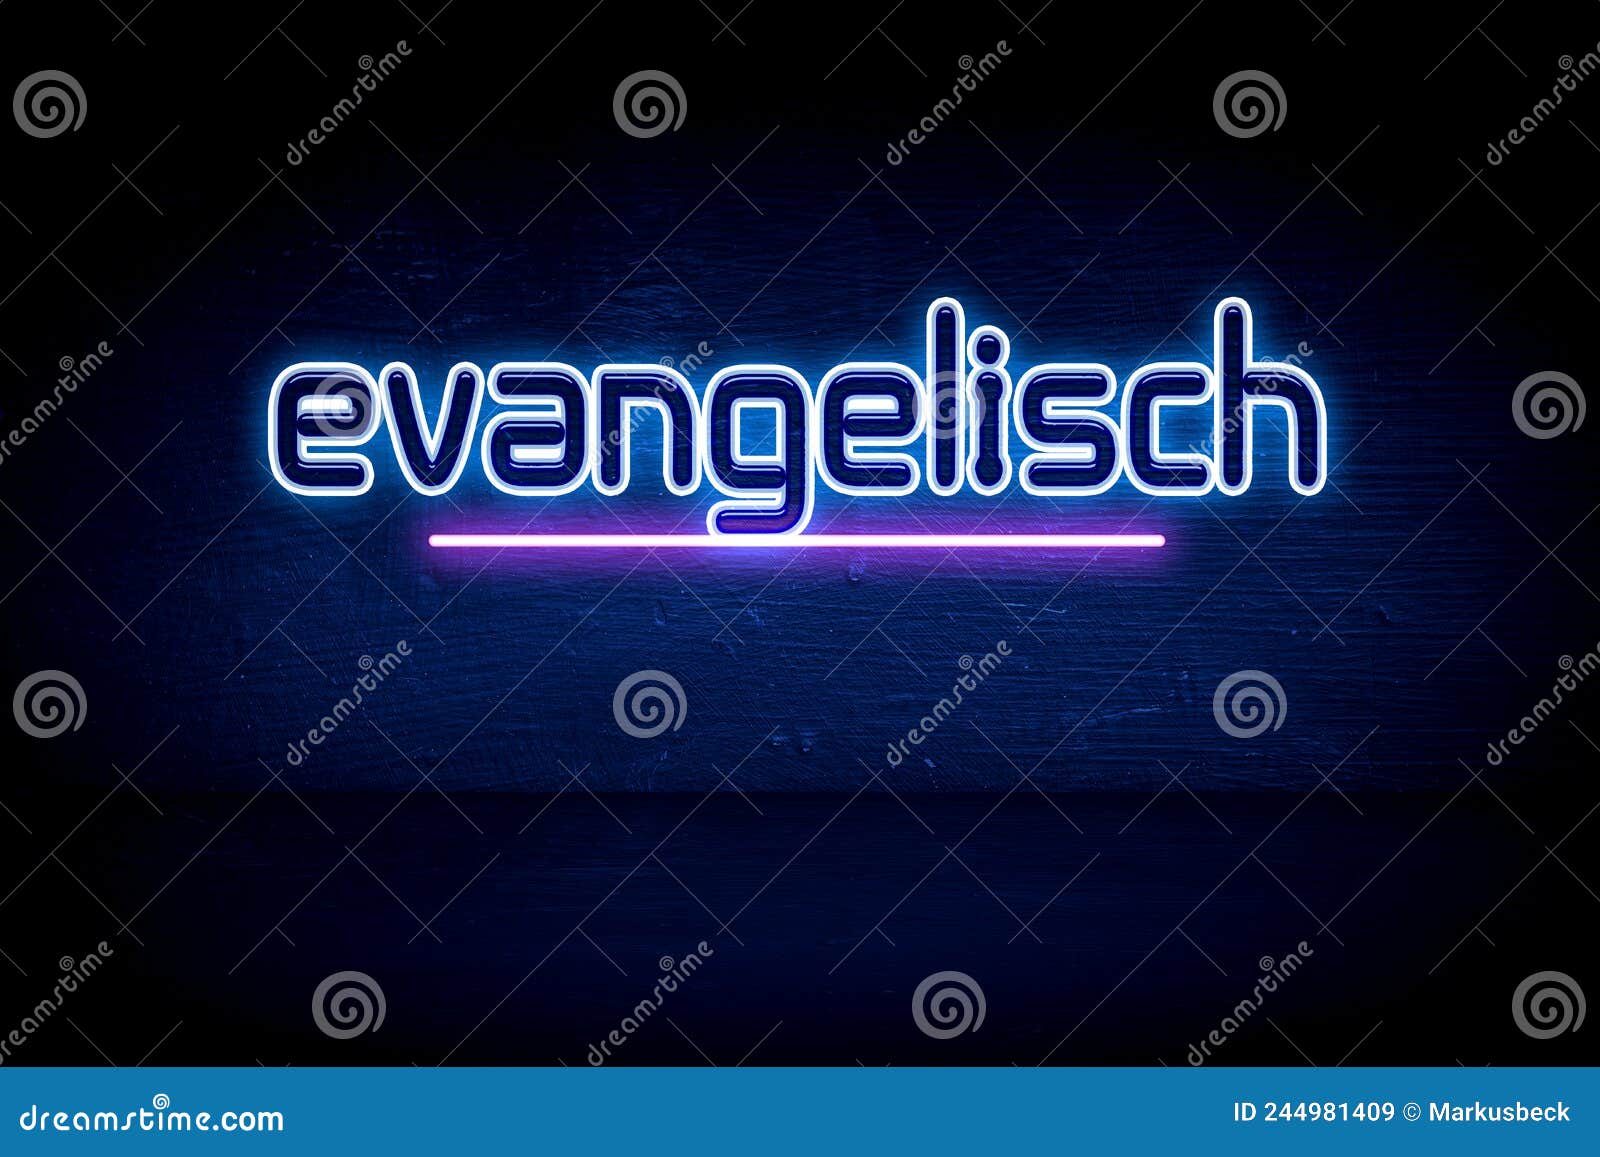 evangelisch - blue neon announcement signboard